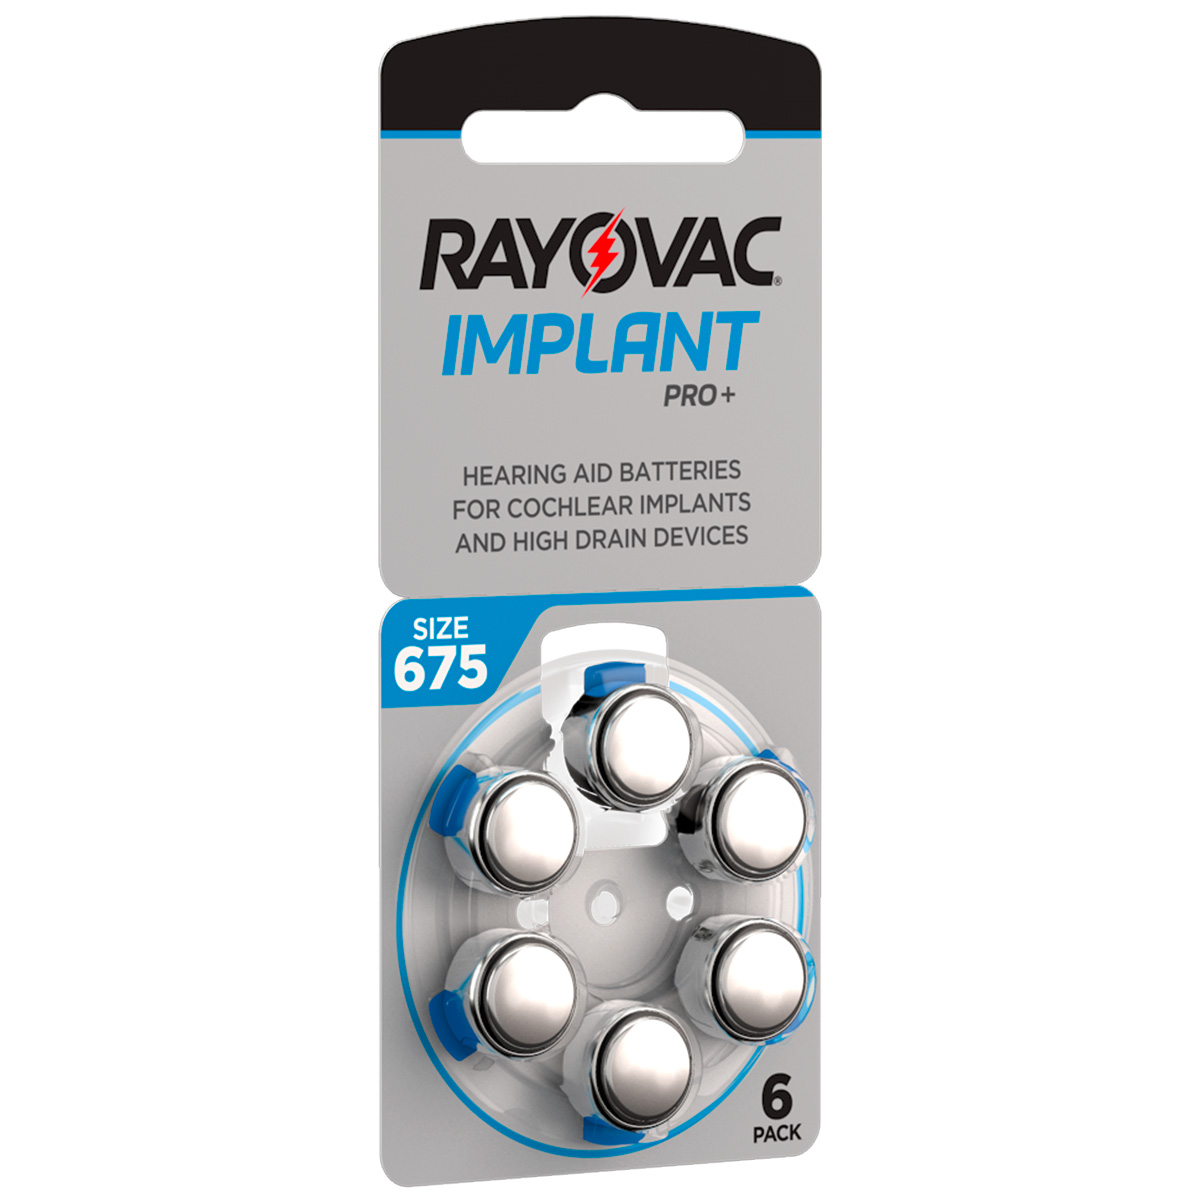 Rayovac Implant Pro+, 6 hoortoestelbatterijen nr. 675 voor cochleaire implantaten, blisterverpakking